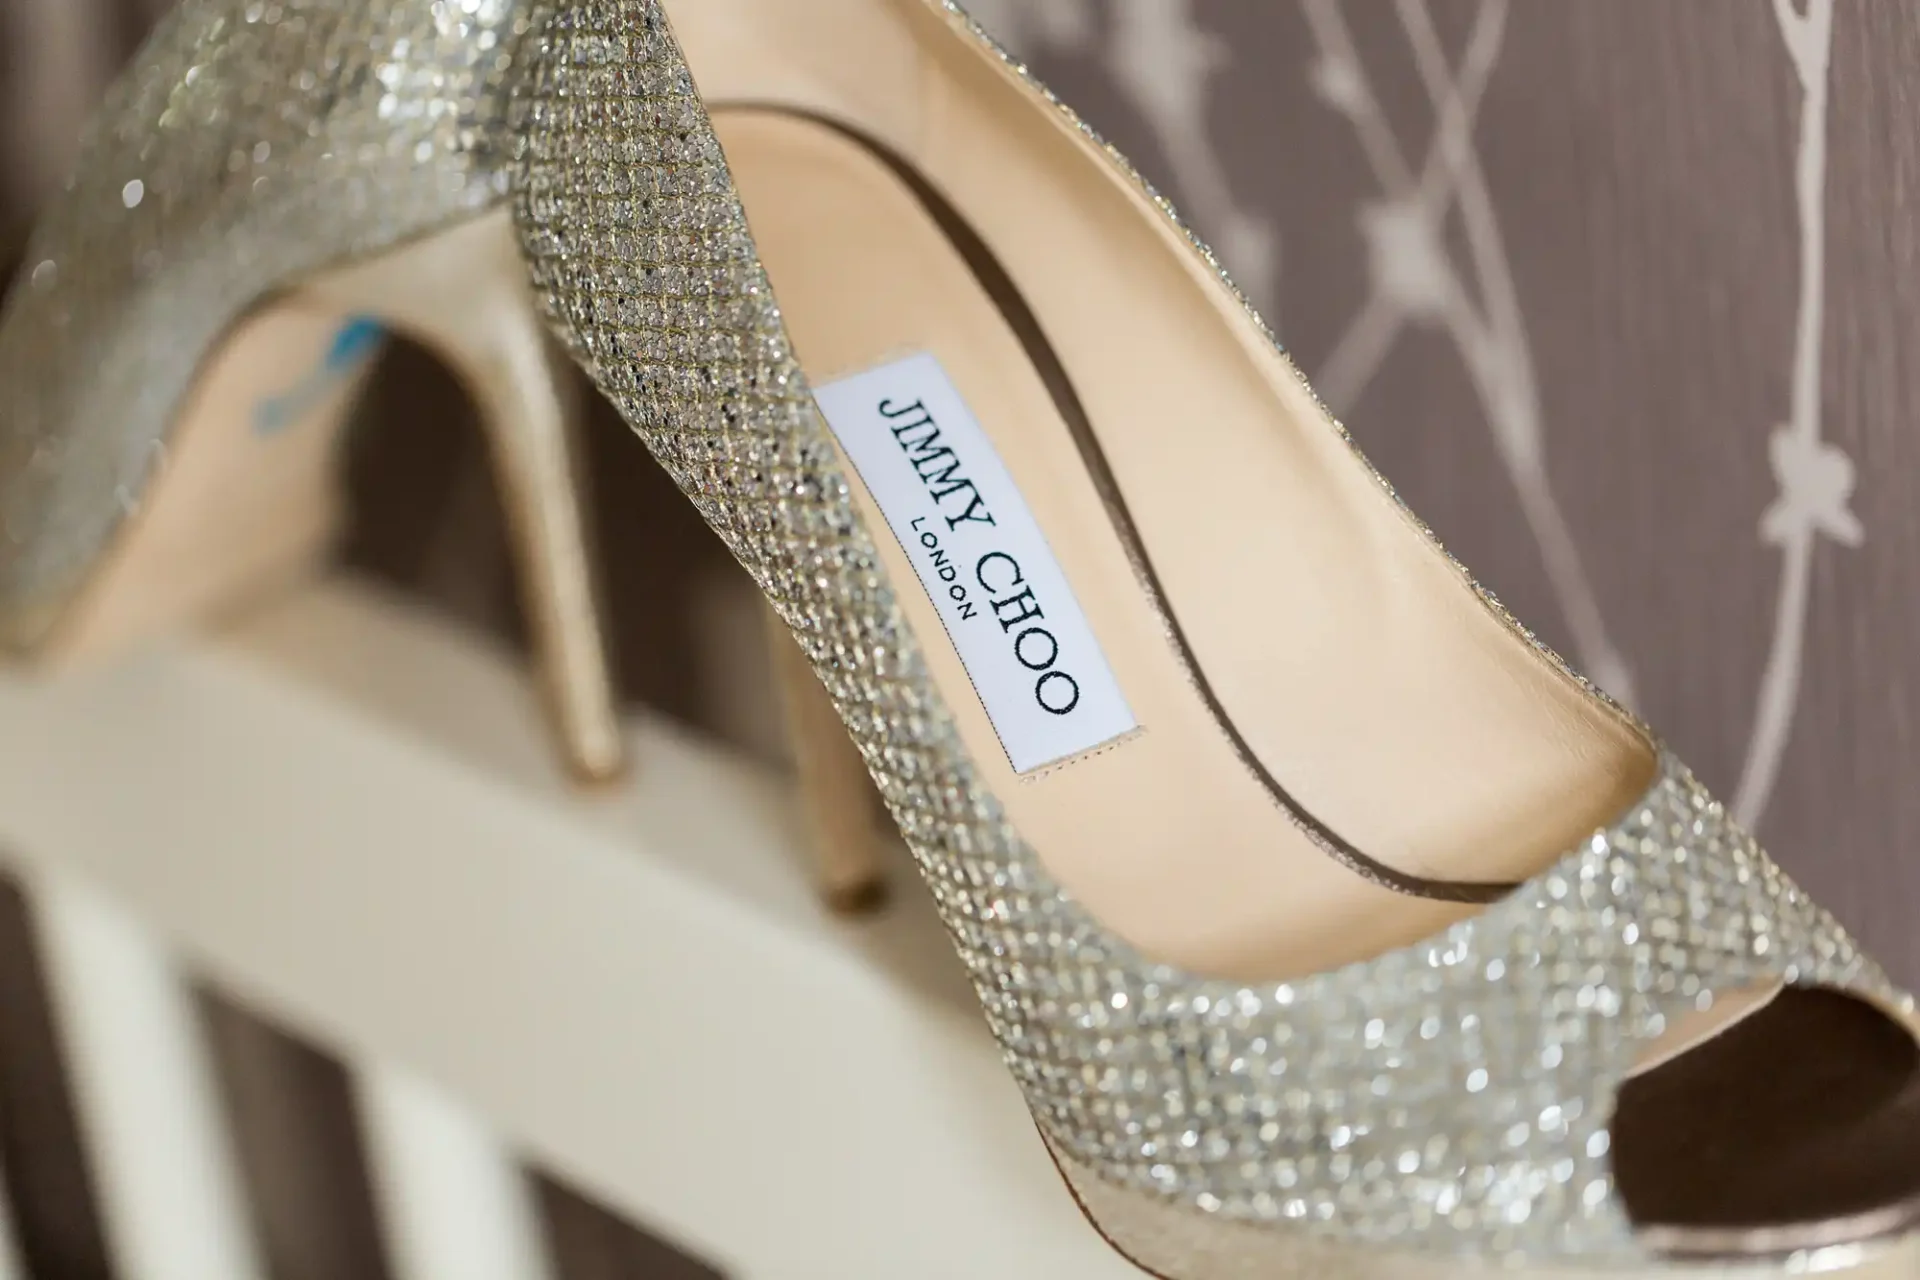 A close-up of a glittery silver jimmy choo high heel shoe displayed on a shelf.